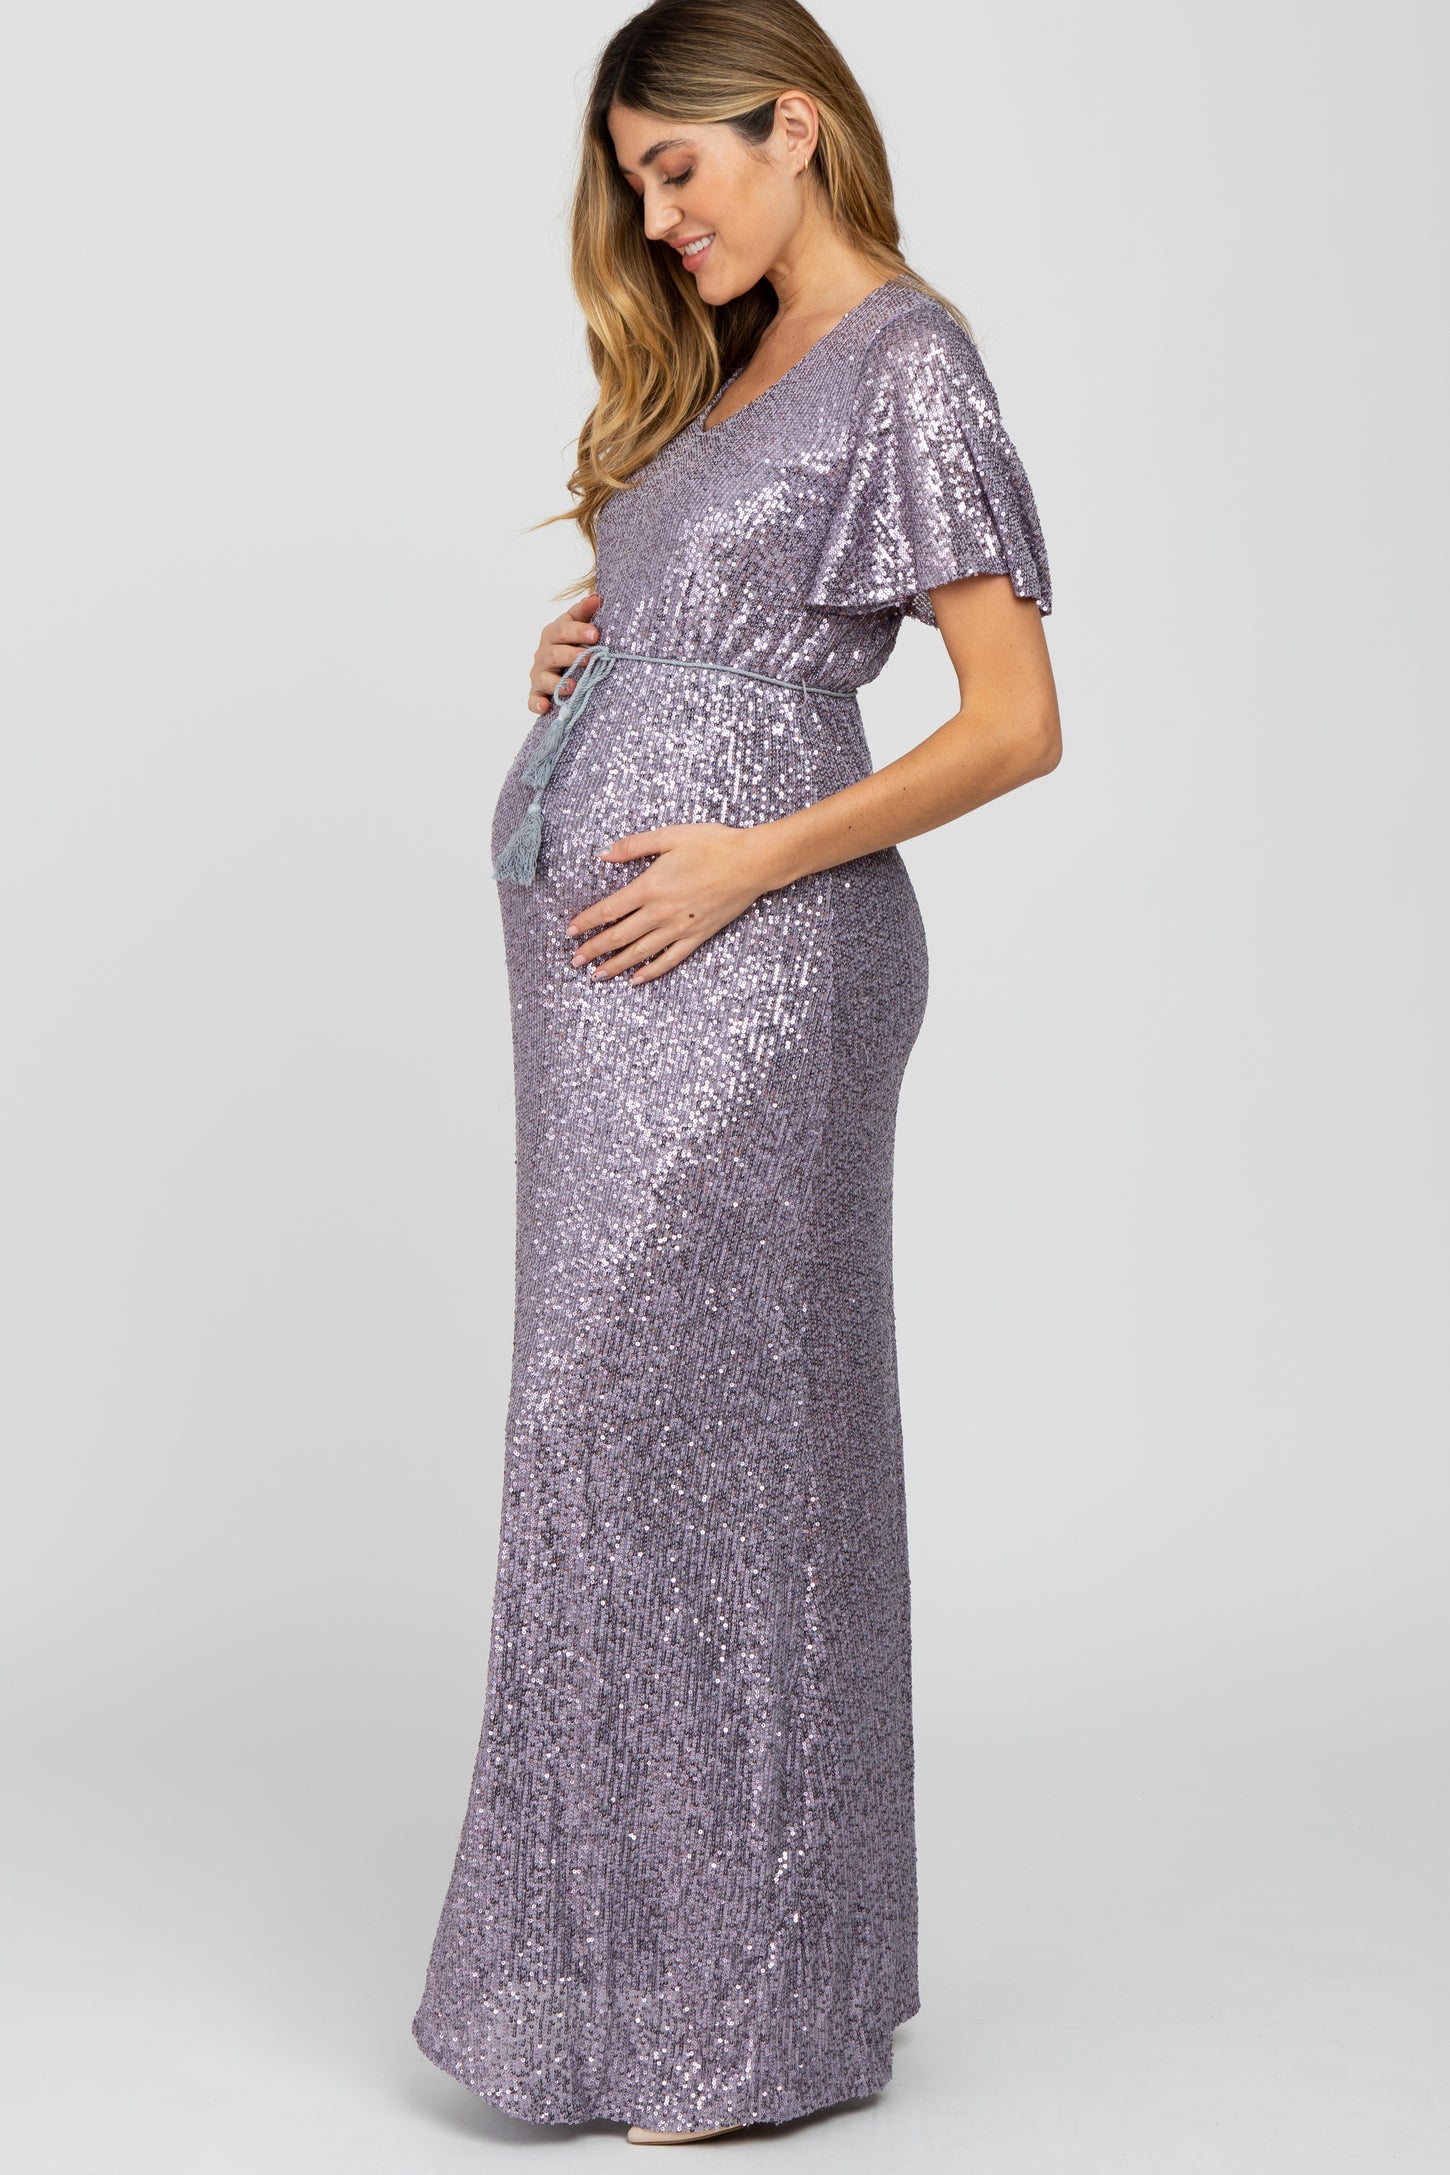 Lavender Sequin Short Sleeve Maternity Maxi Dress